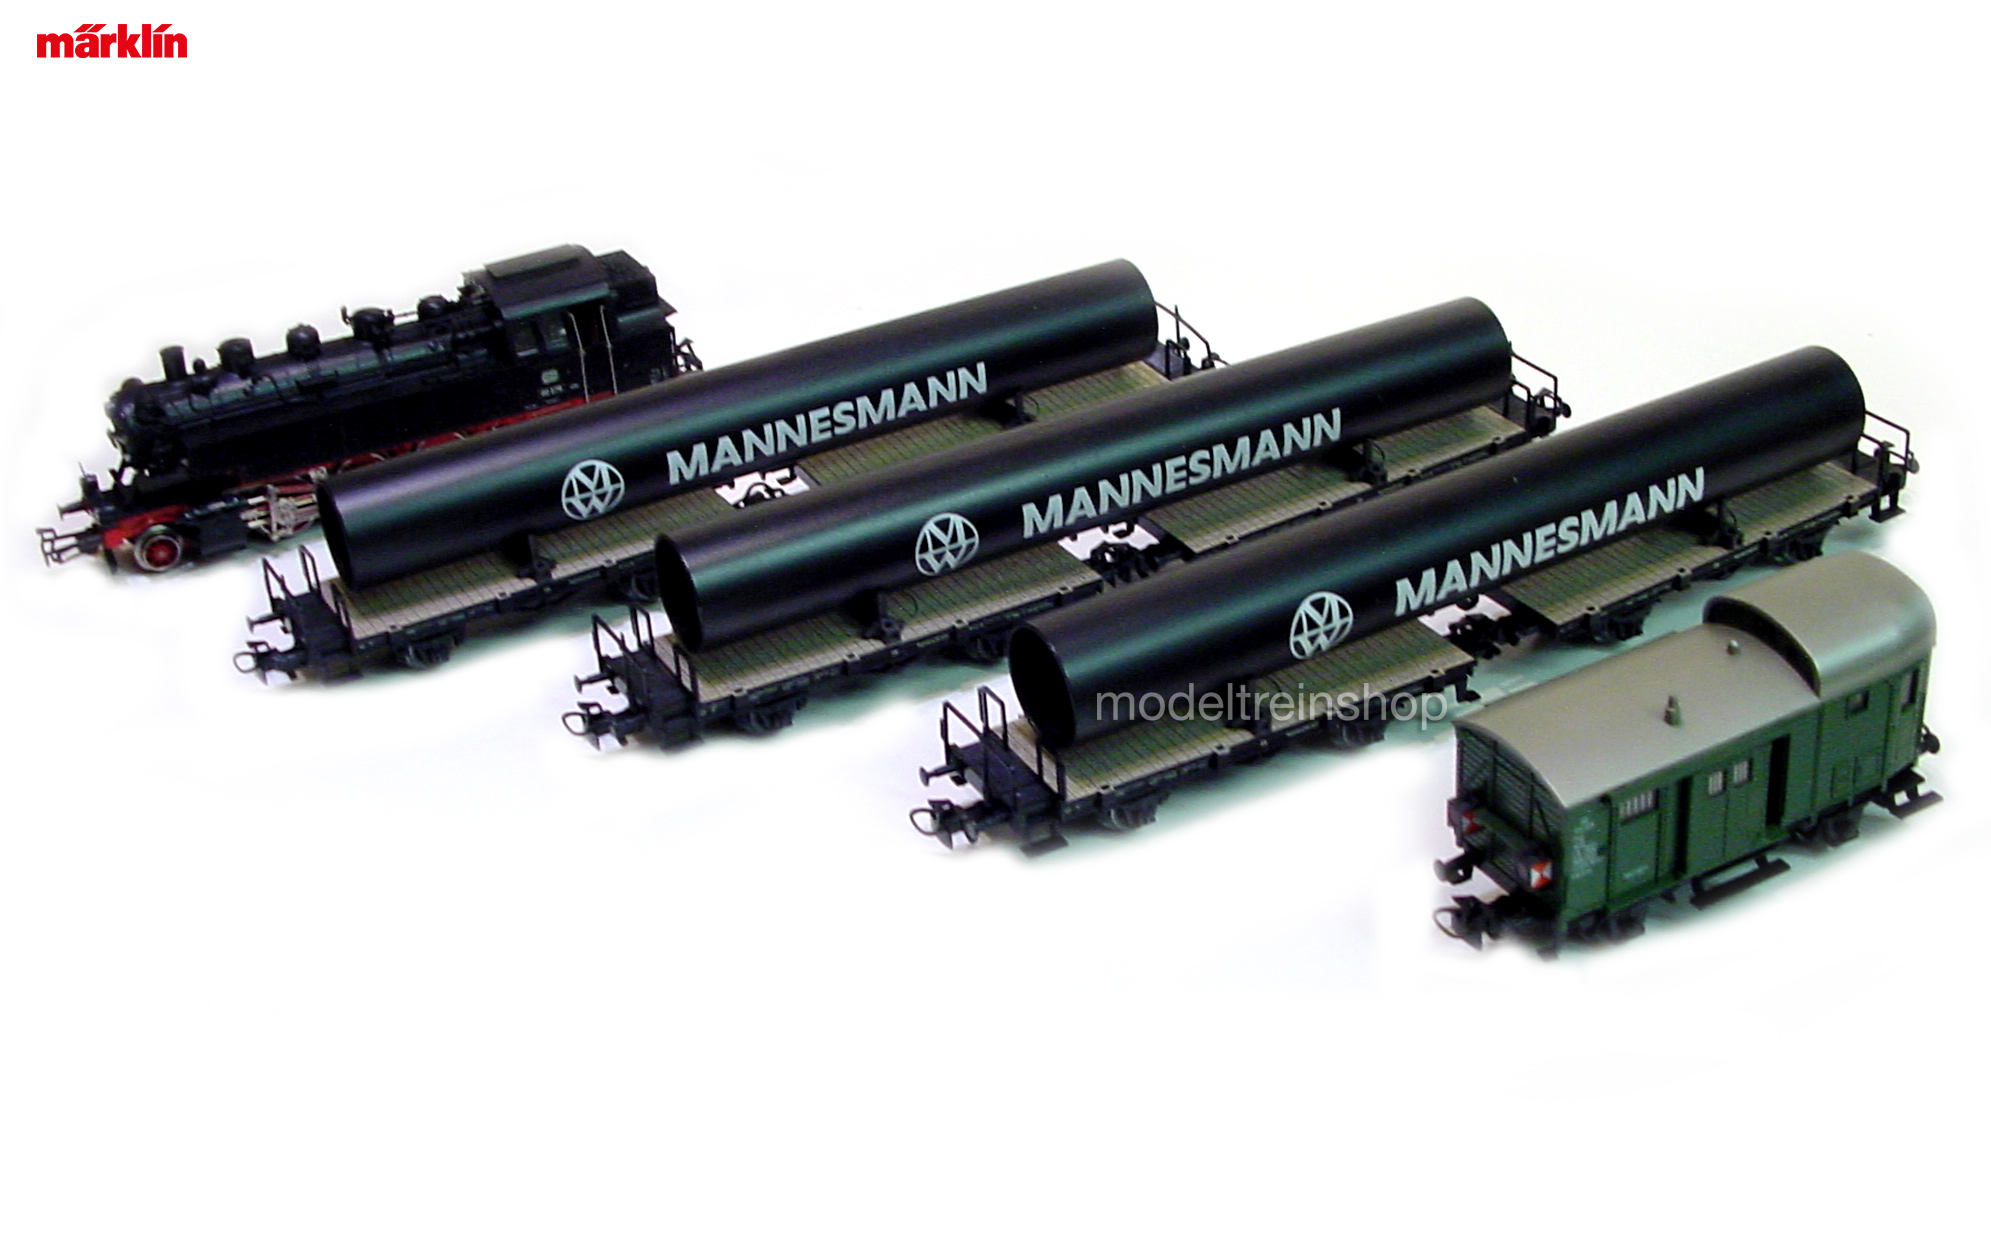 Marklin H0 2854 Mannesmann-Röhren Treinset - Modeltreinshop